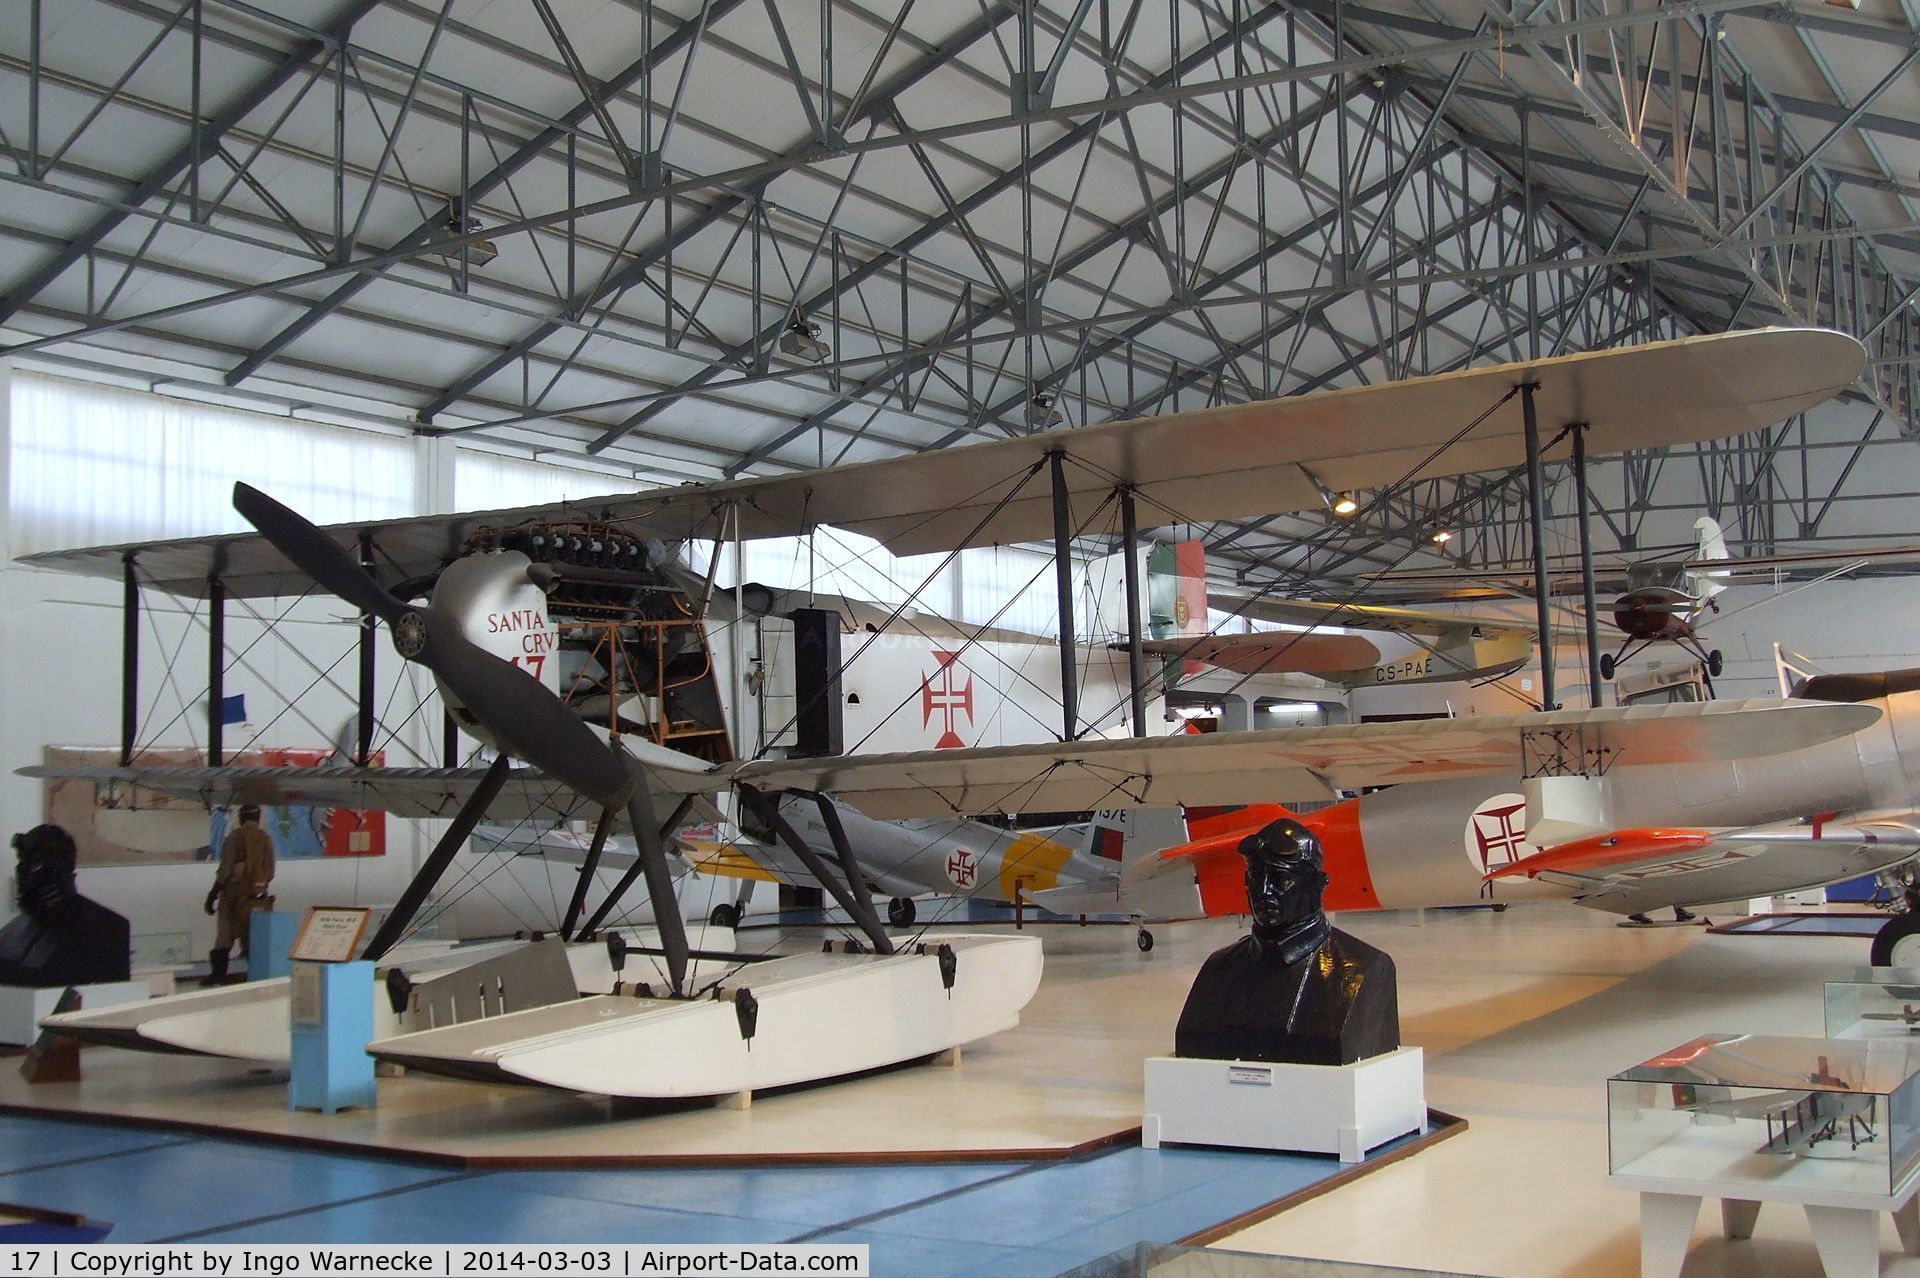 17, Fairey IIID Seaplane Replica C/N Not found 17, Fairey IIID Replica at the Museu do Ar, Alverca